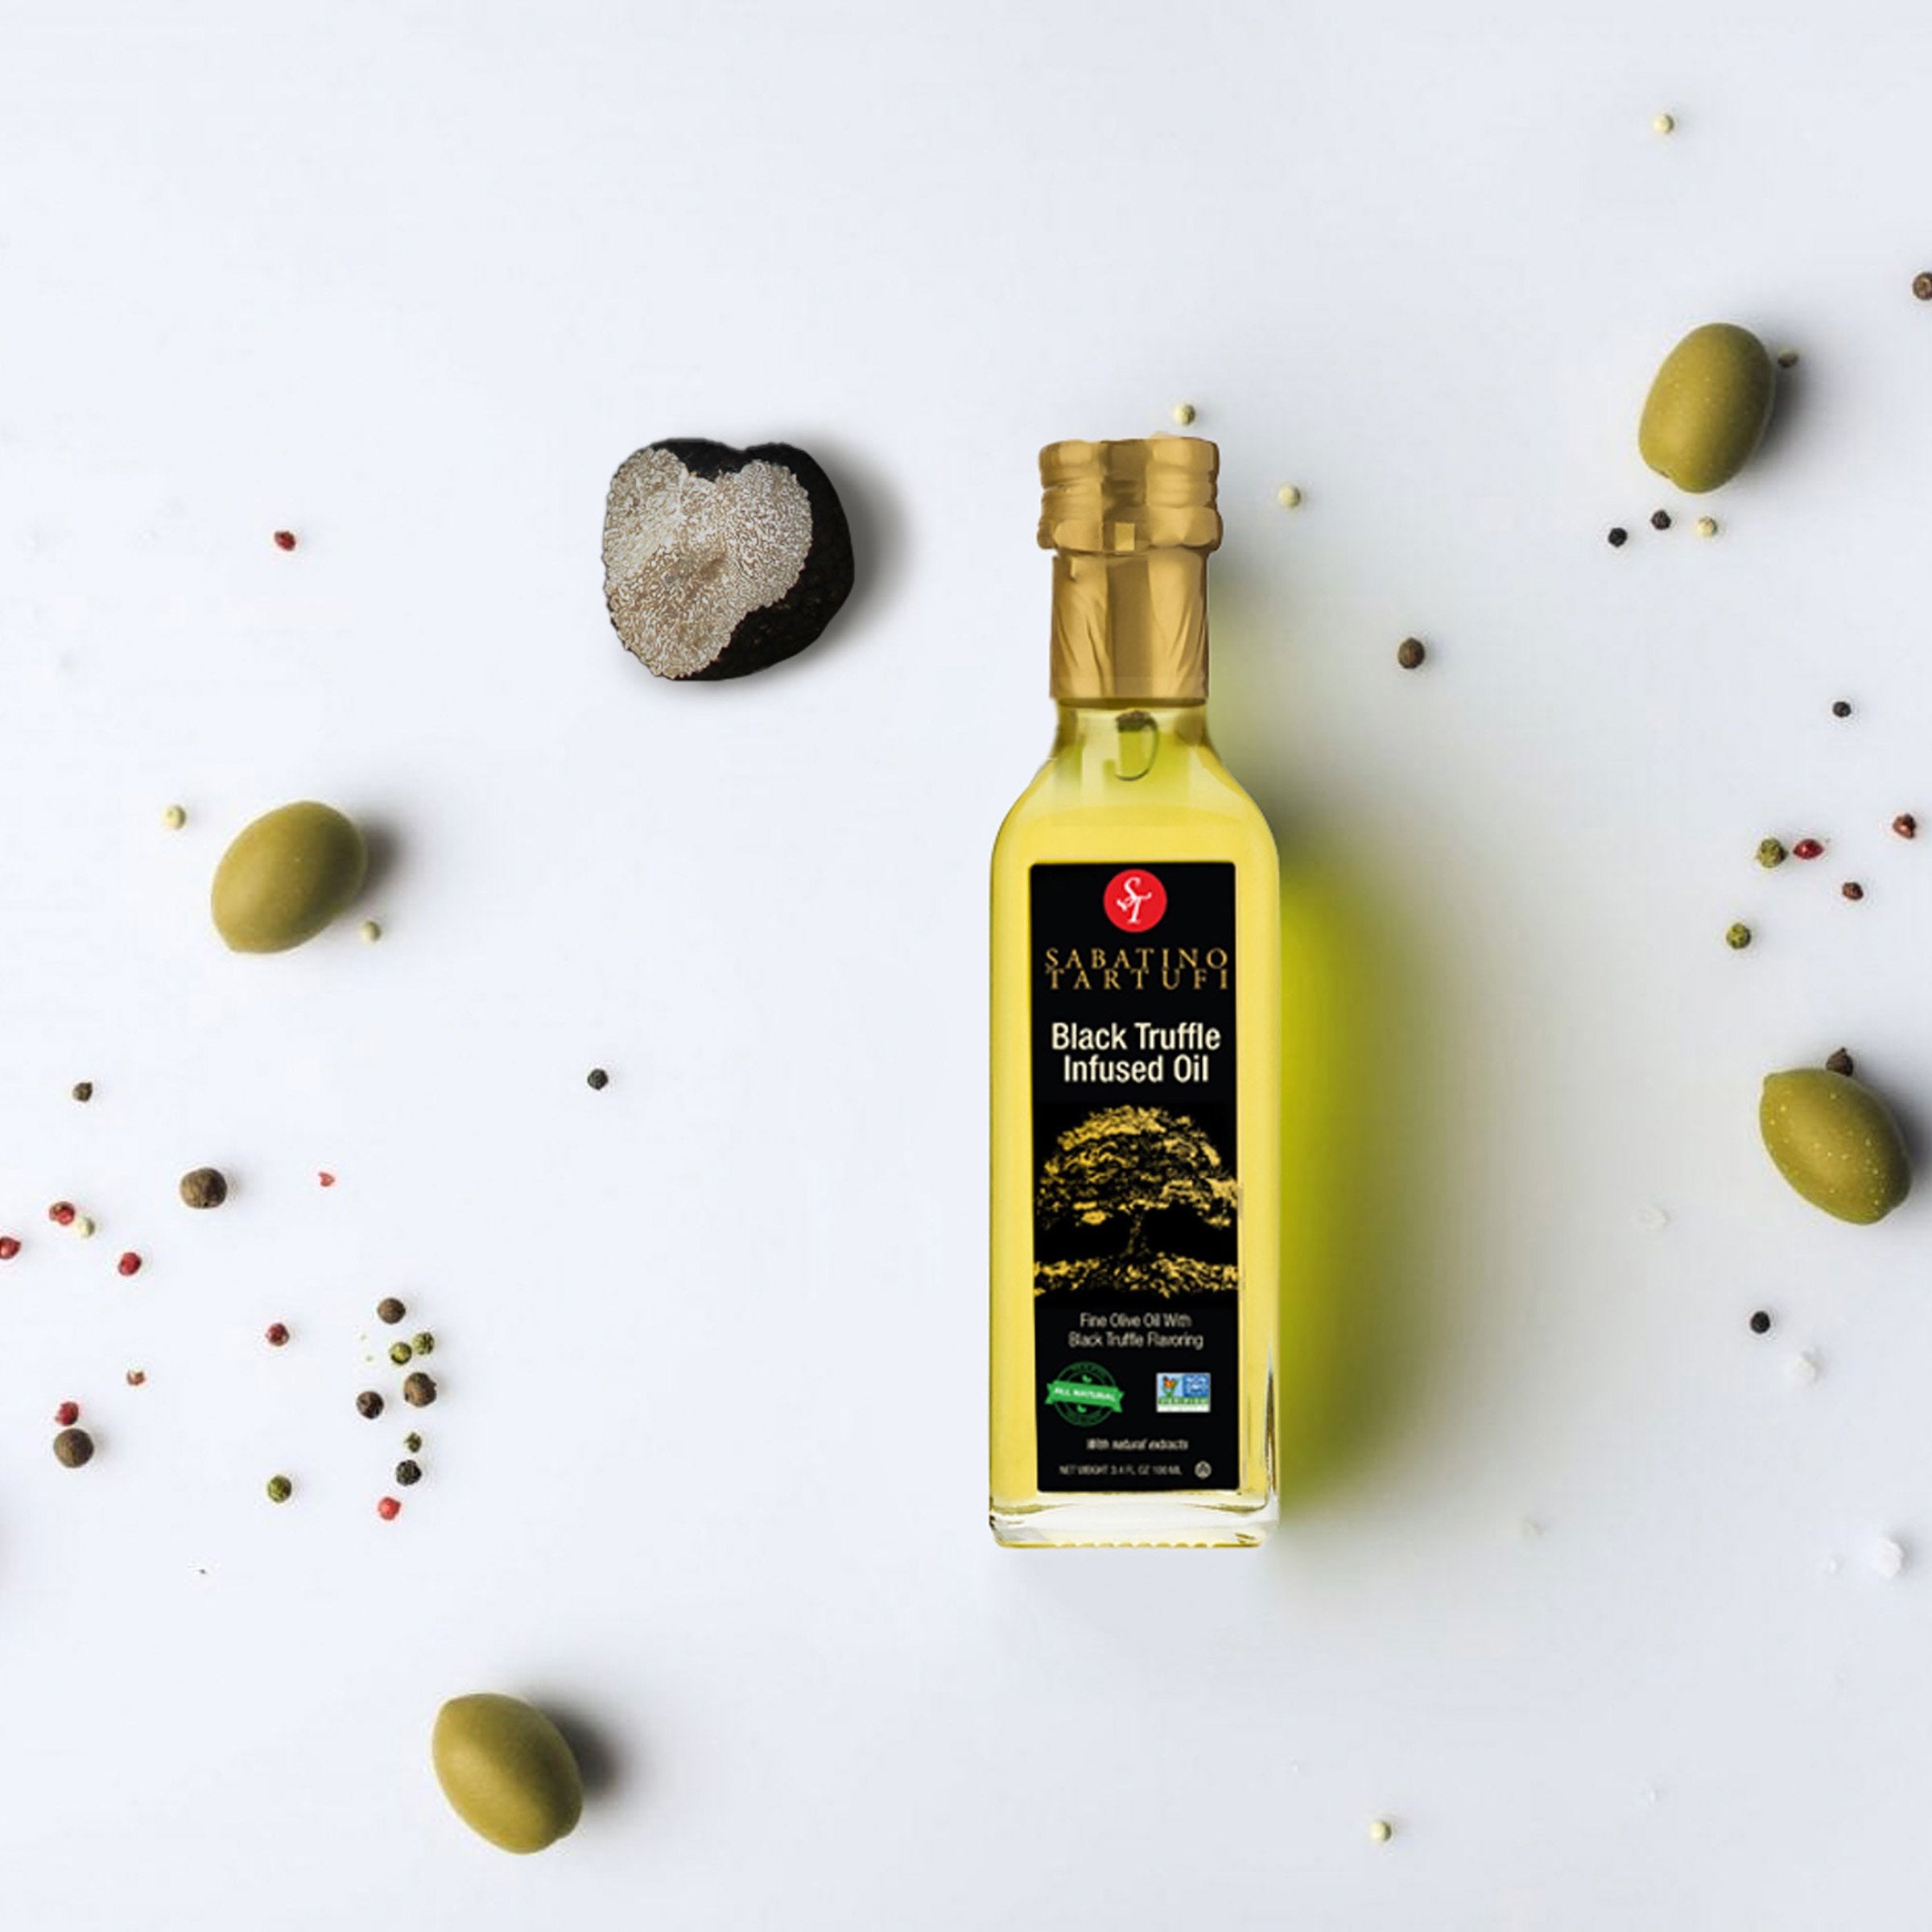 Black Truffle Infused Olive Oil - 3.4 fl oz <br> Case Pack 6 Units